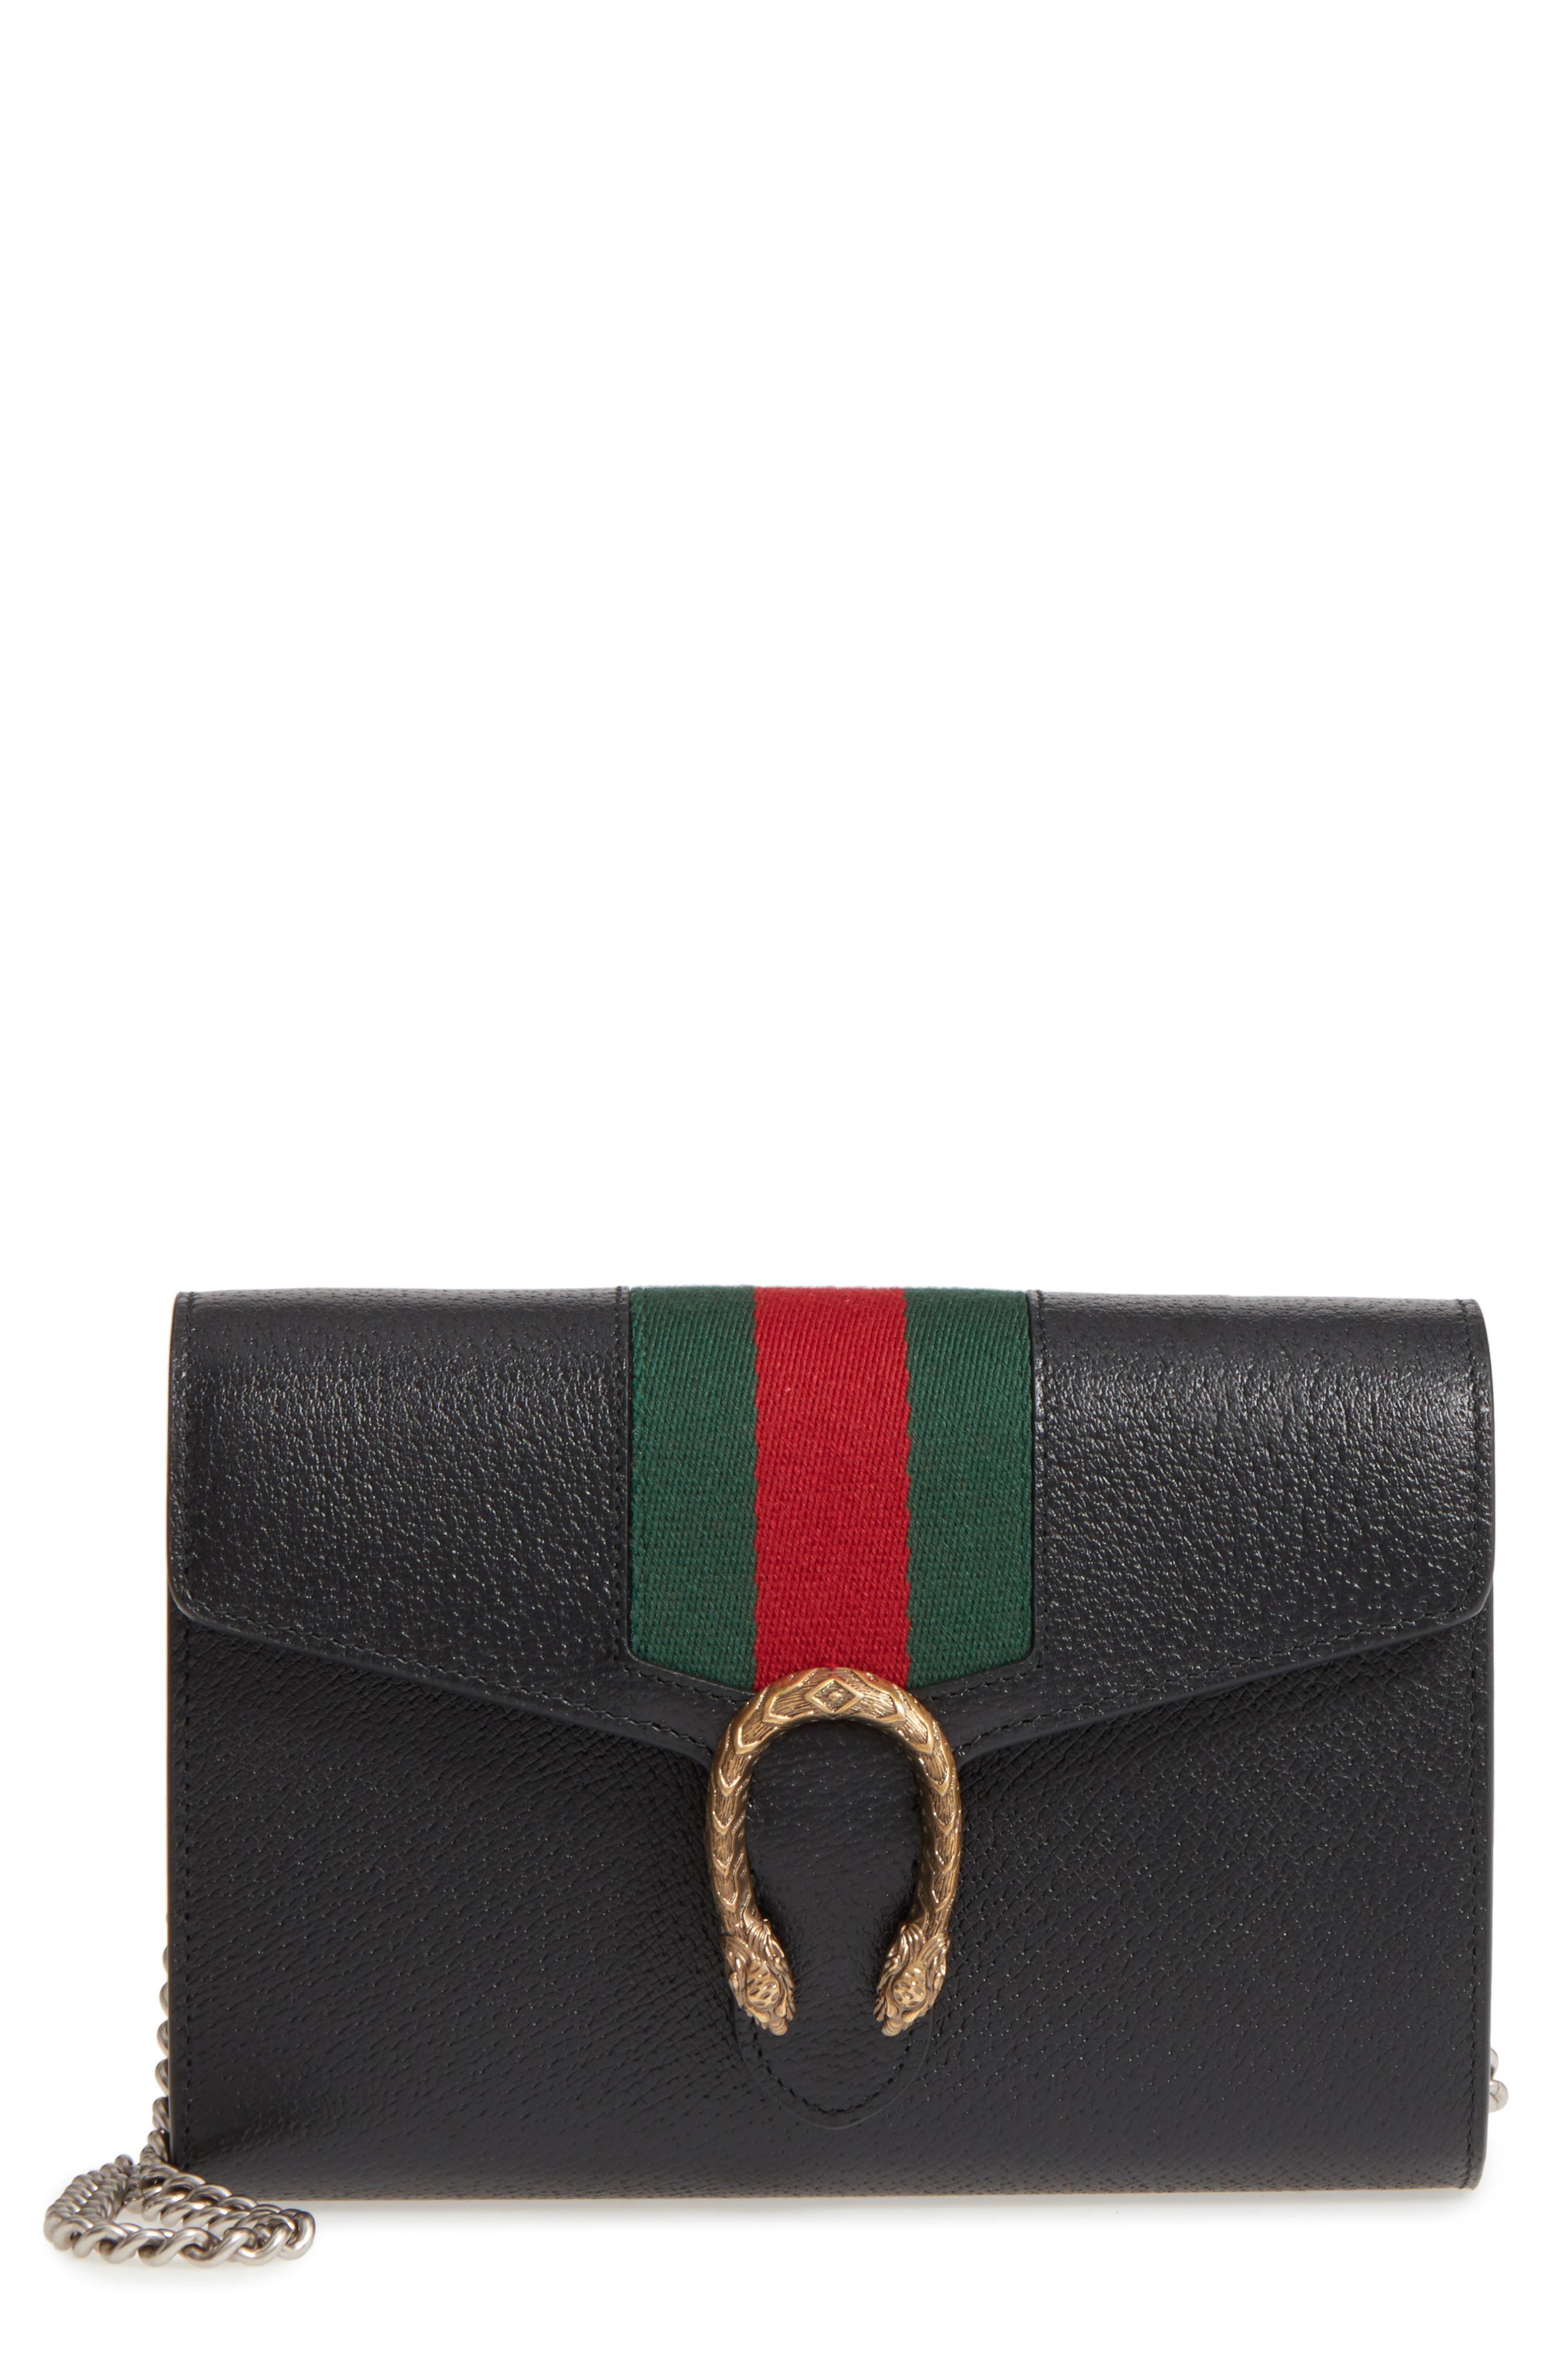 Gucci Web Stripe Leather Wallet on a 